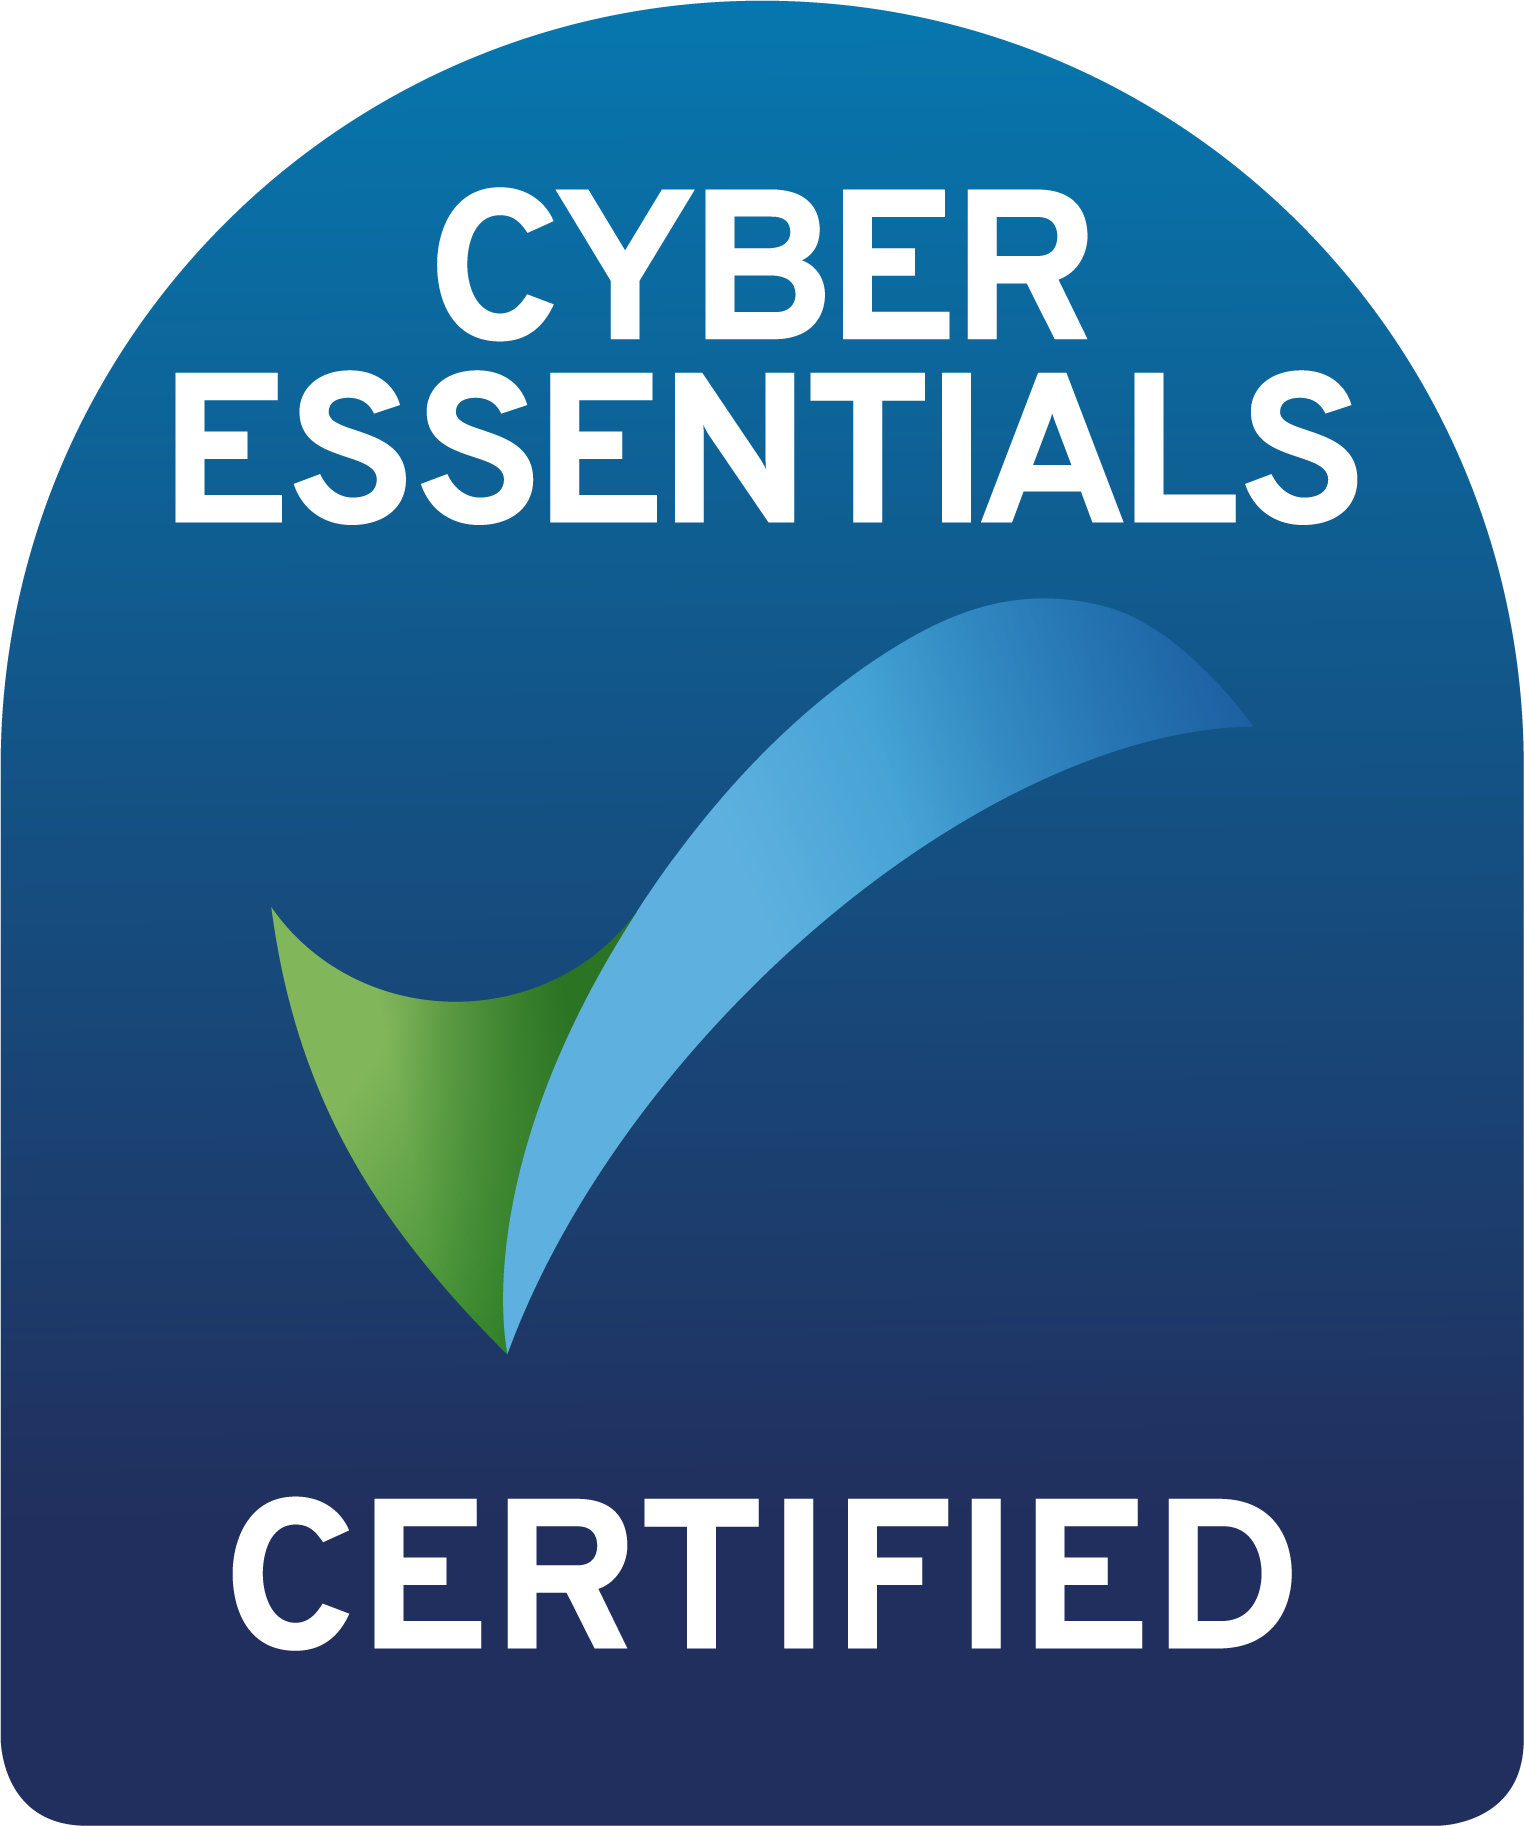 We're Cyber Essentials certified